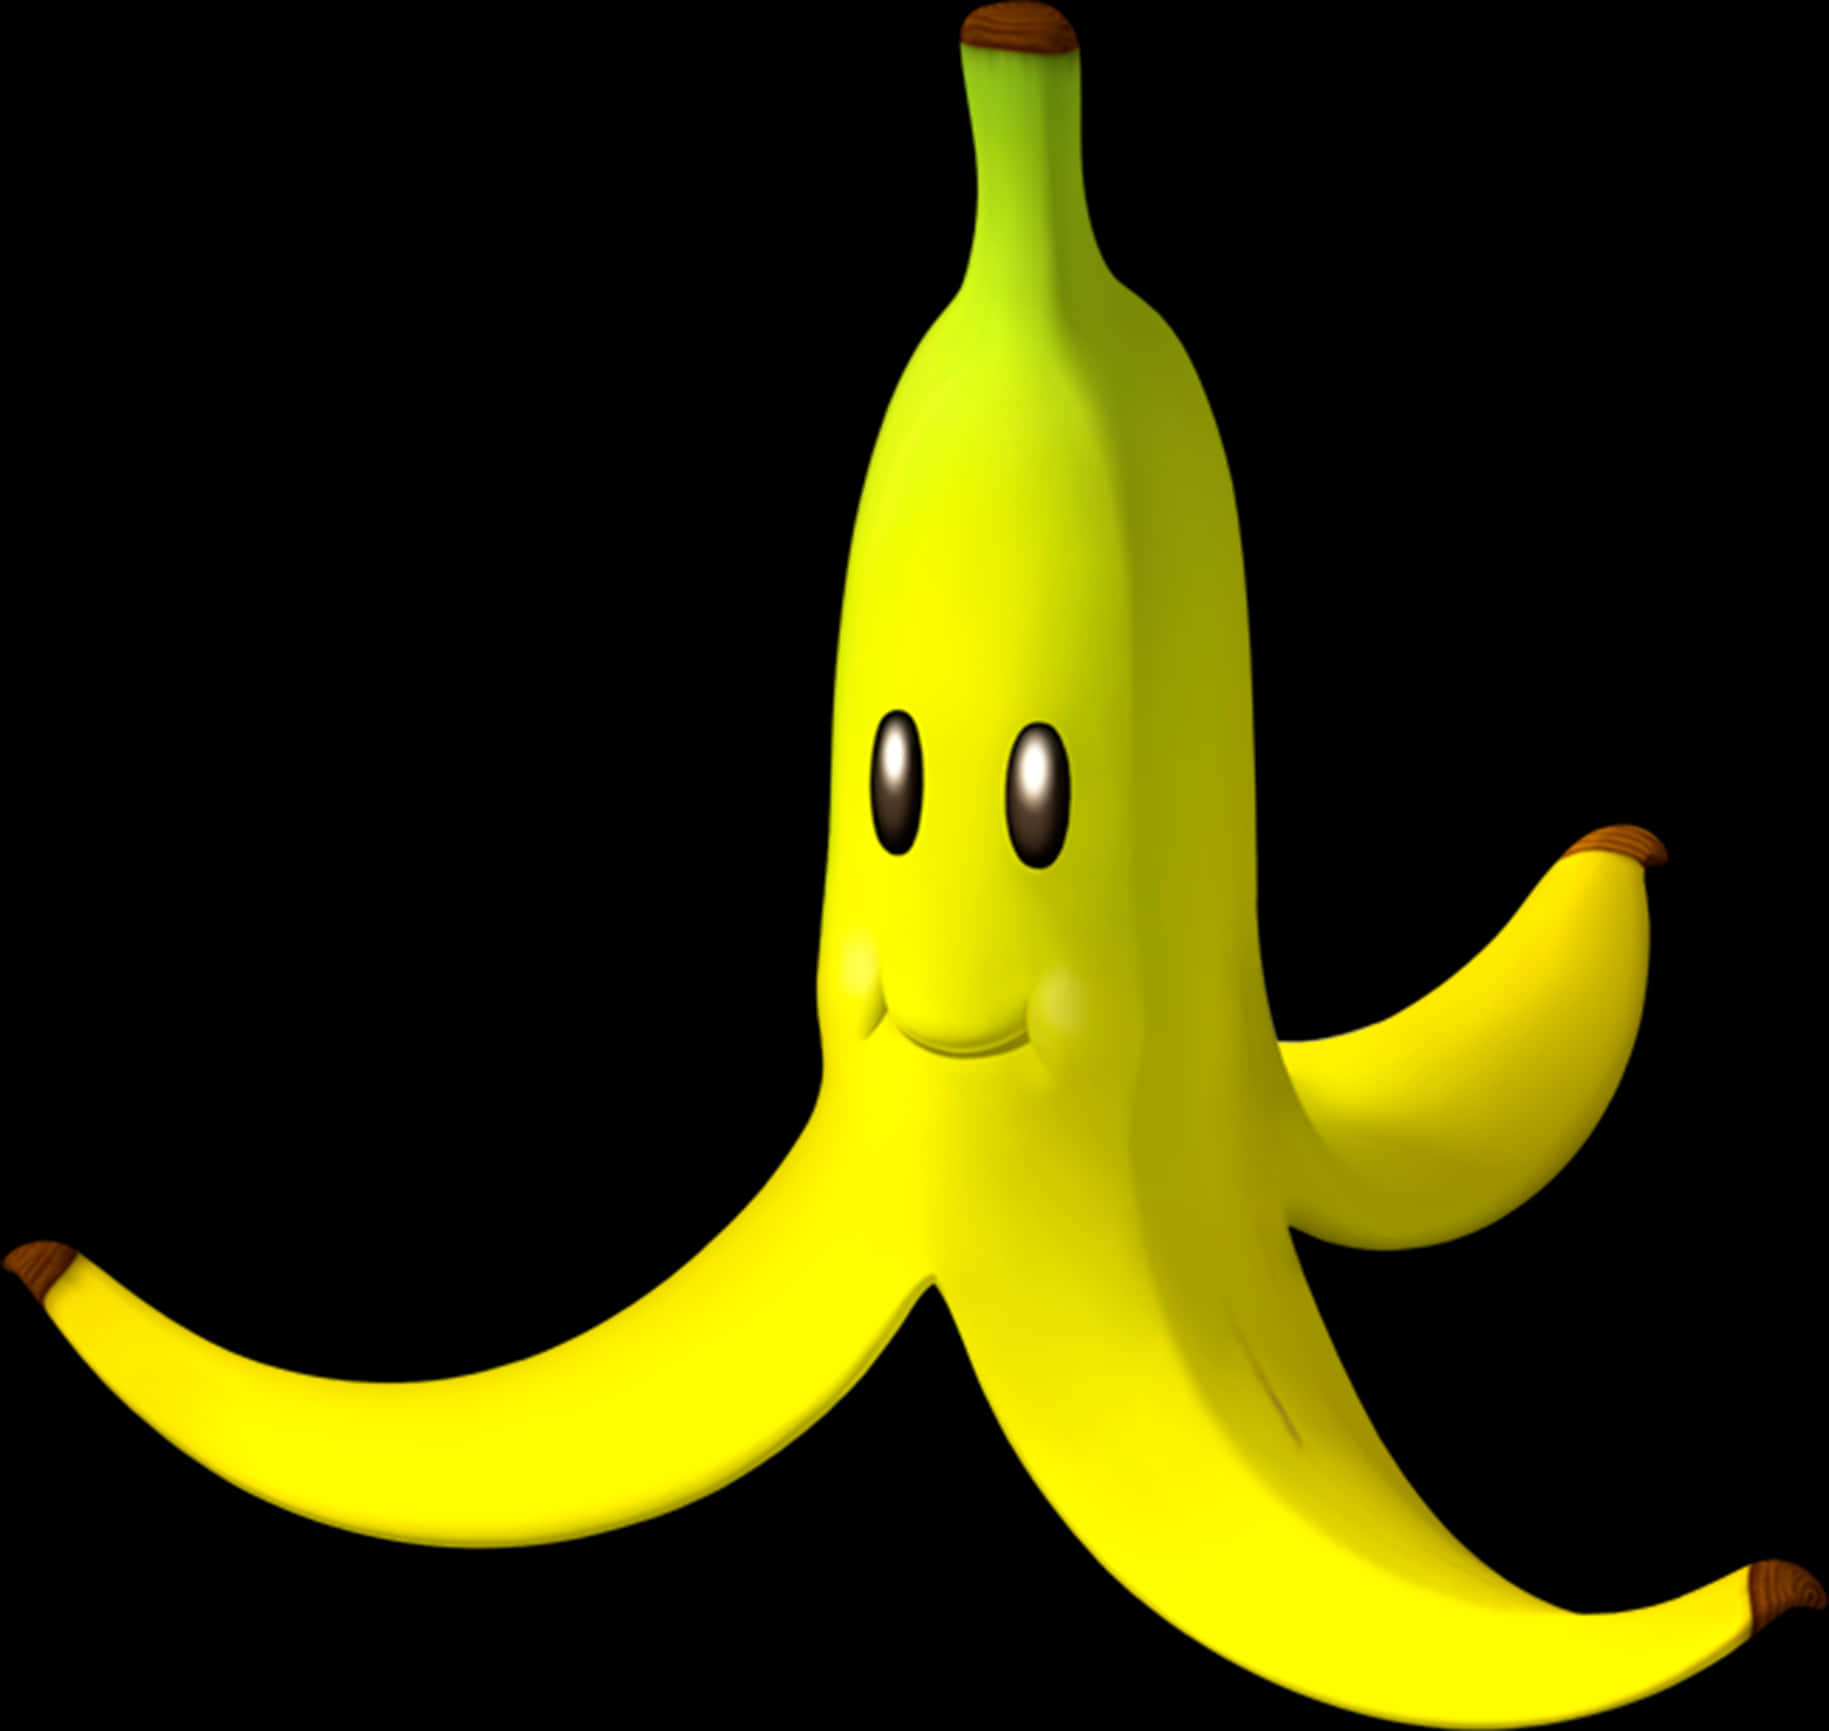 Animated Smiling Banana Character PNG image